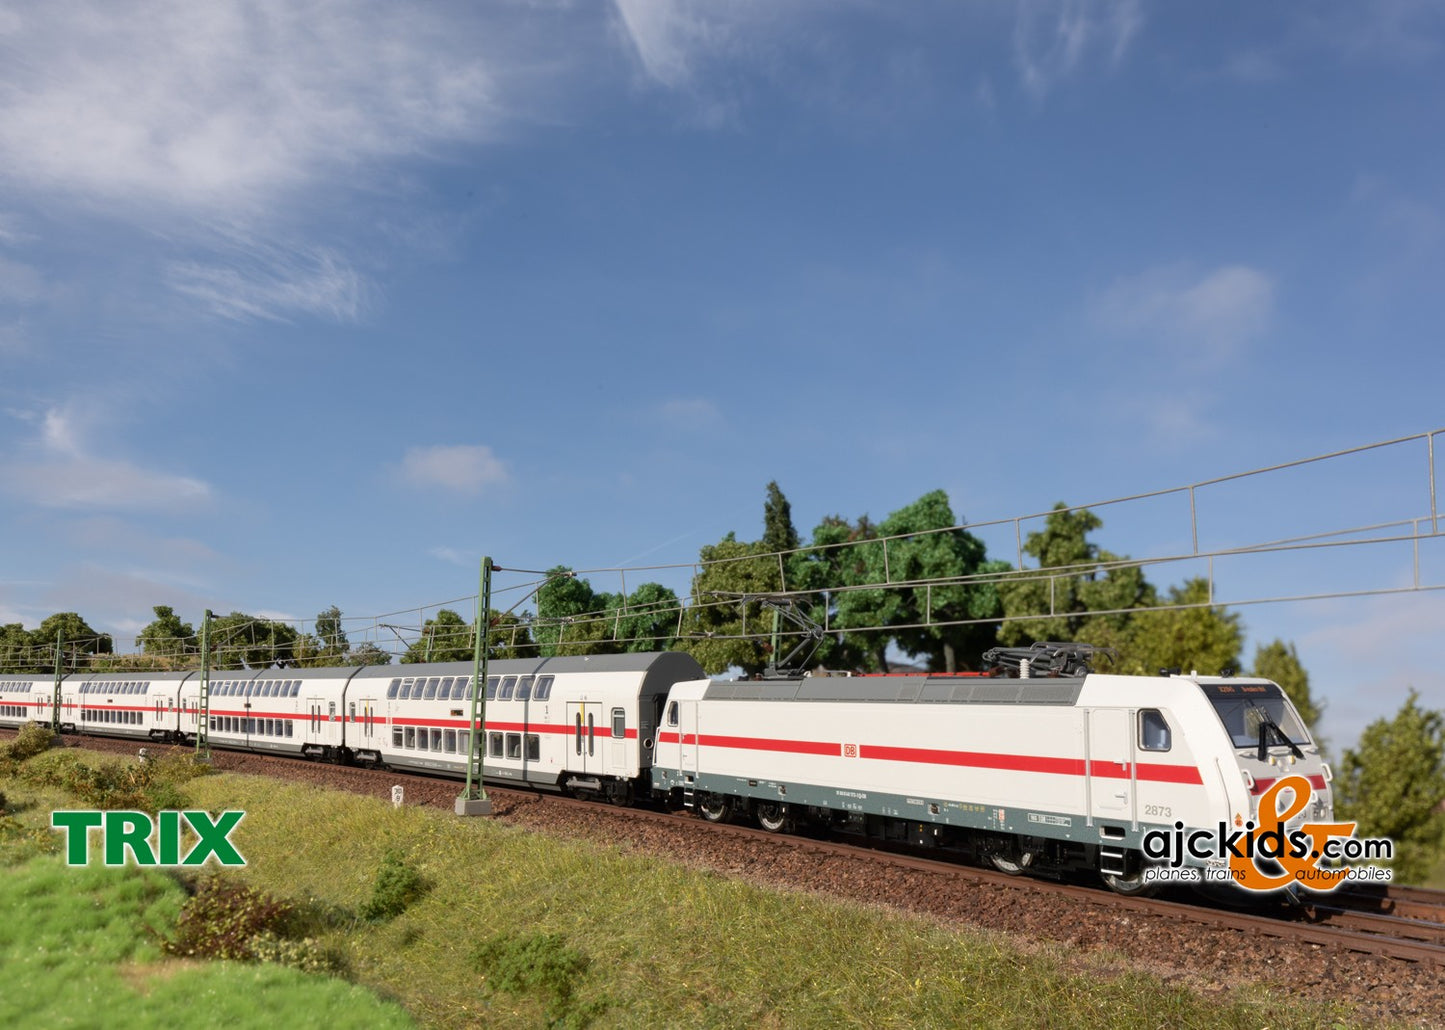 Trix 25449 - Class 146.5 Electric Locomotive